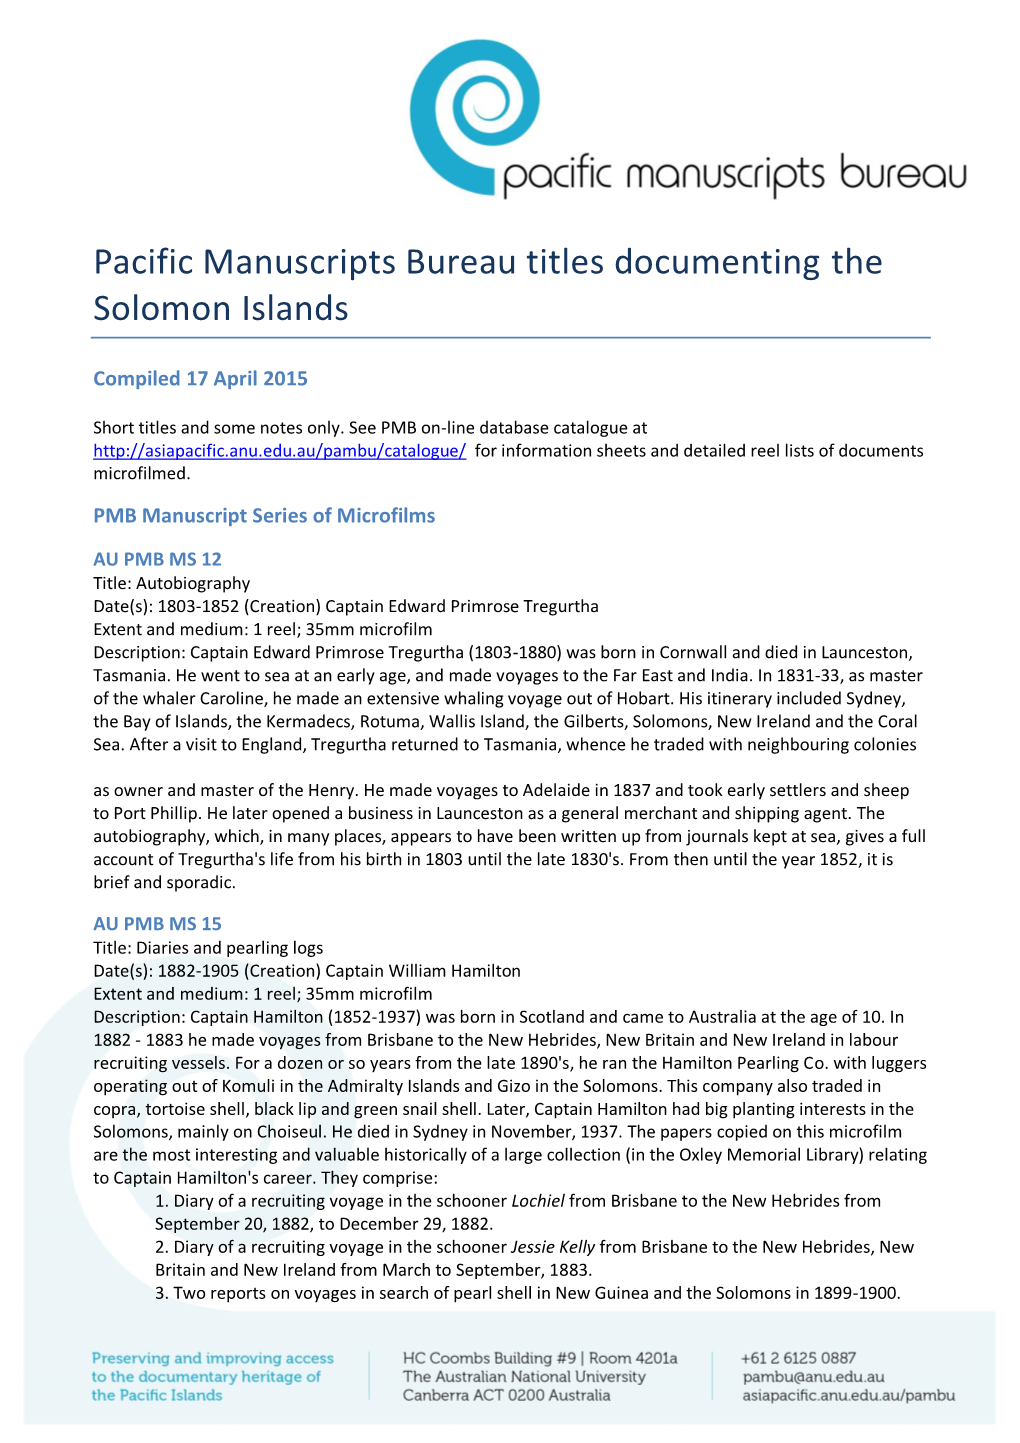 Pacific Manuscripts Bureau Titles Documenting the Solomon Islands